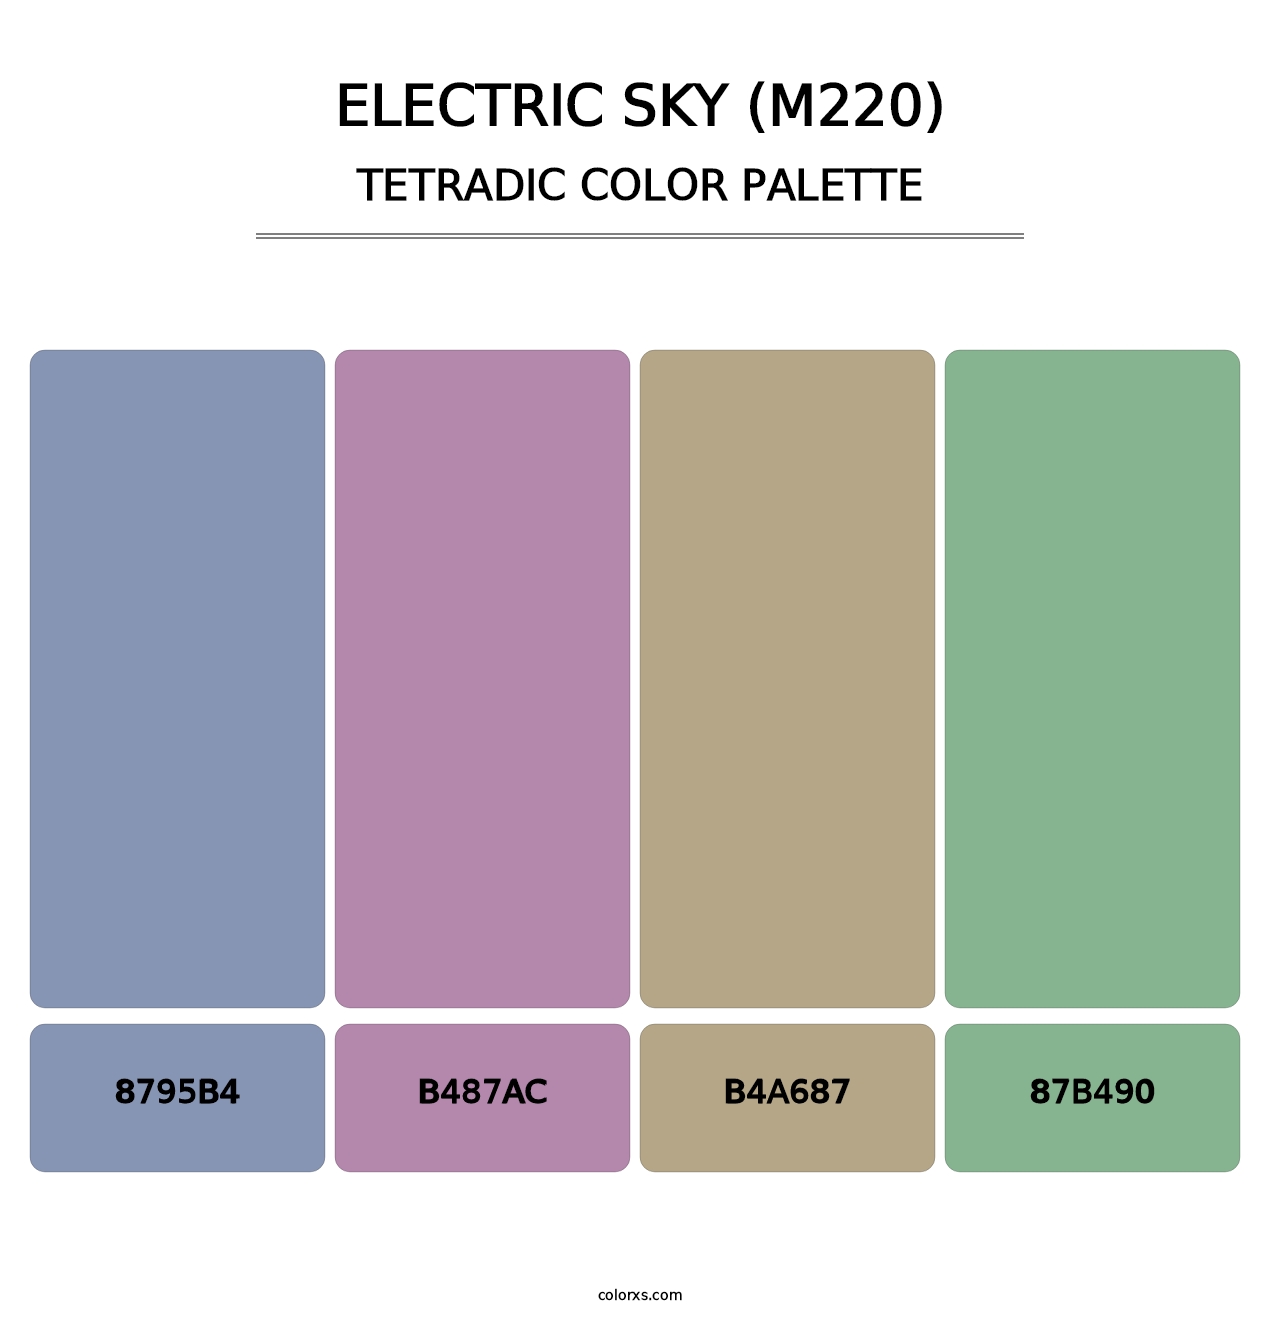 Electric Sky (M220) - Tetradic Color Palette